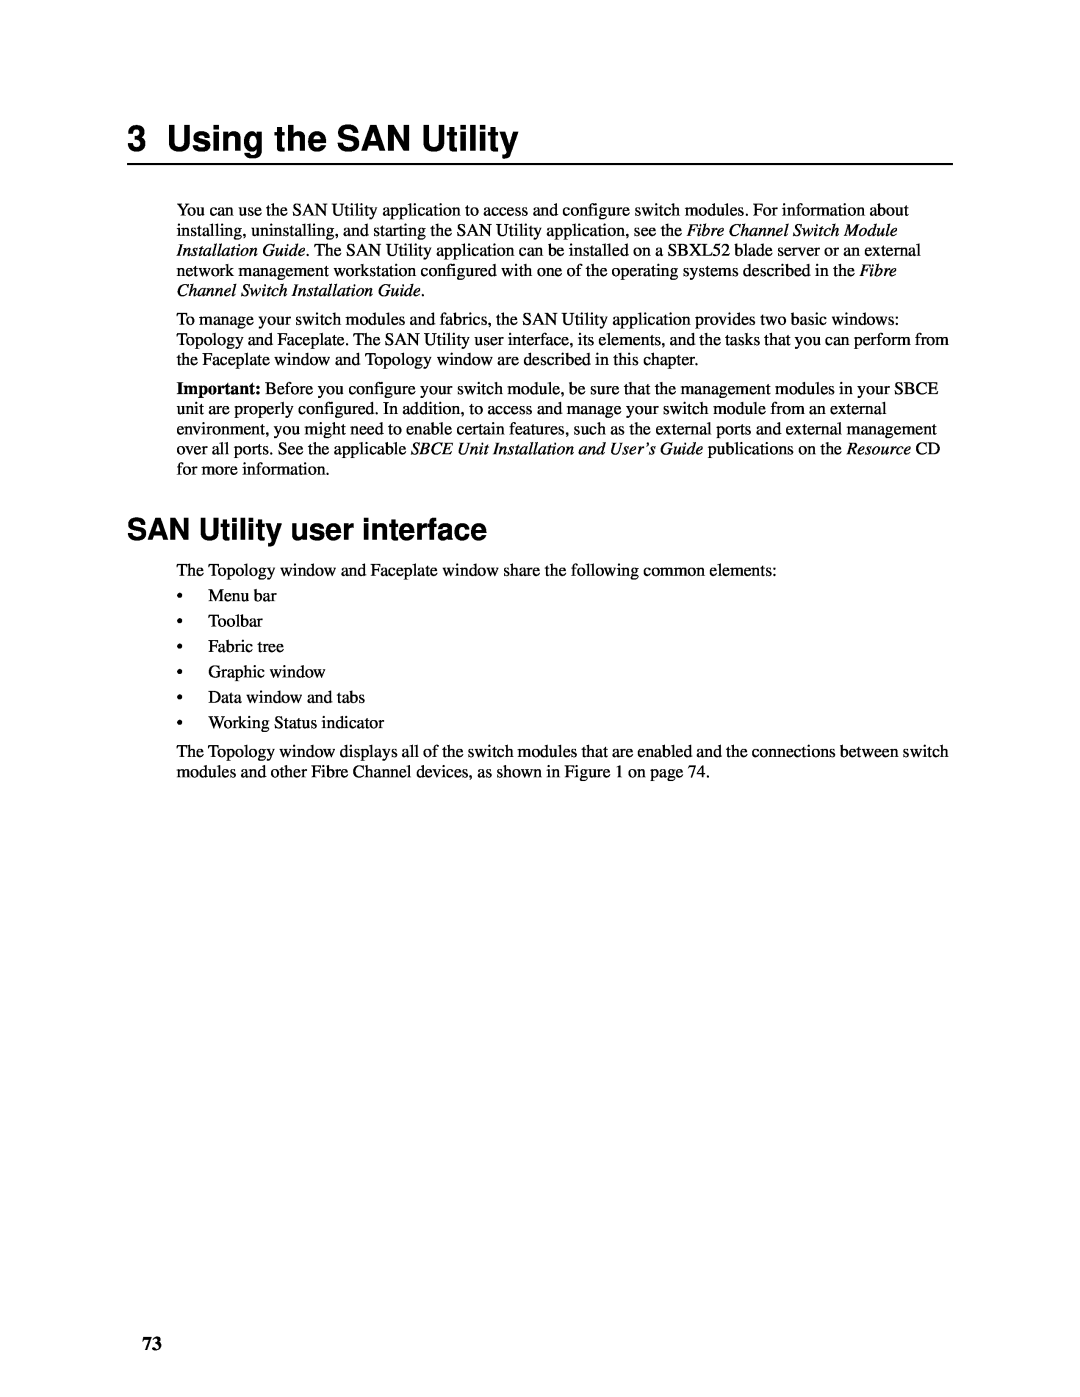 Intel SBCEFCSW manual Using the SAN Utility, SAN Utility user interface 